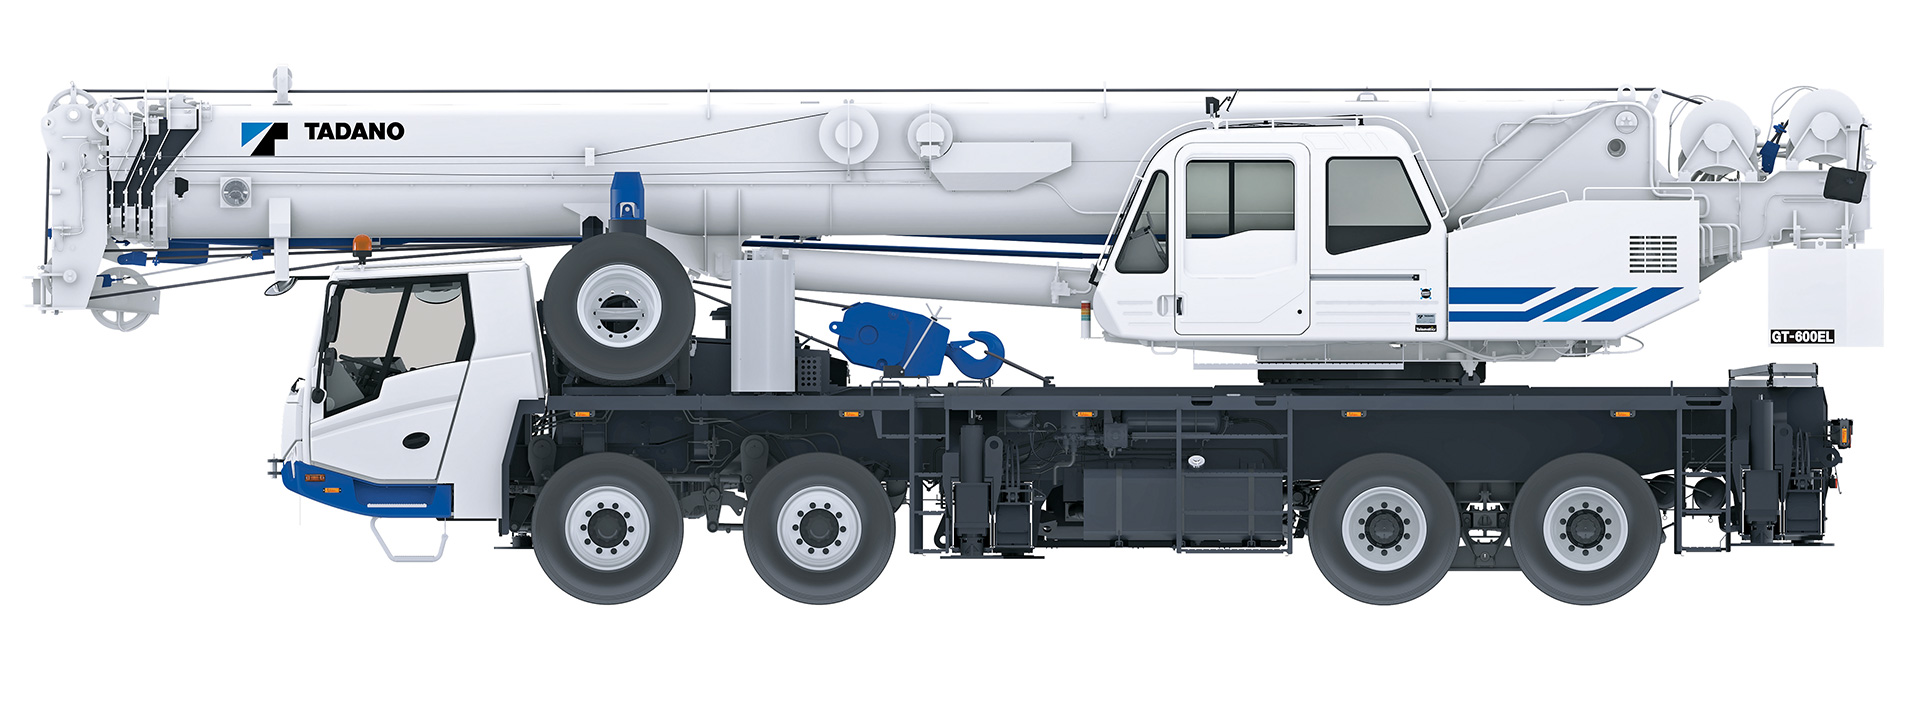 Tadano Truck Crane GT-600ER-3 (Right-hand drive)